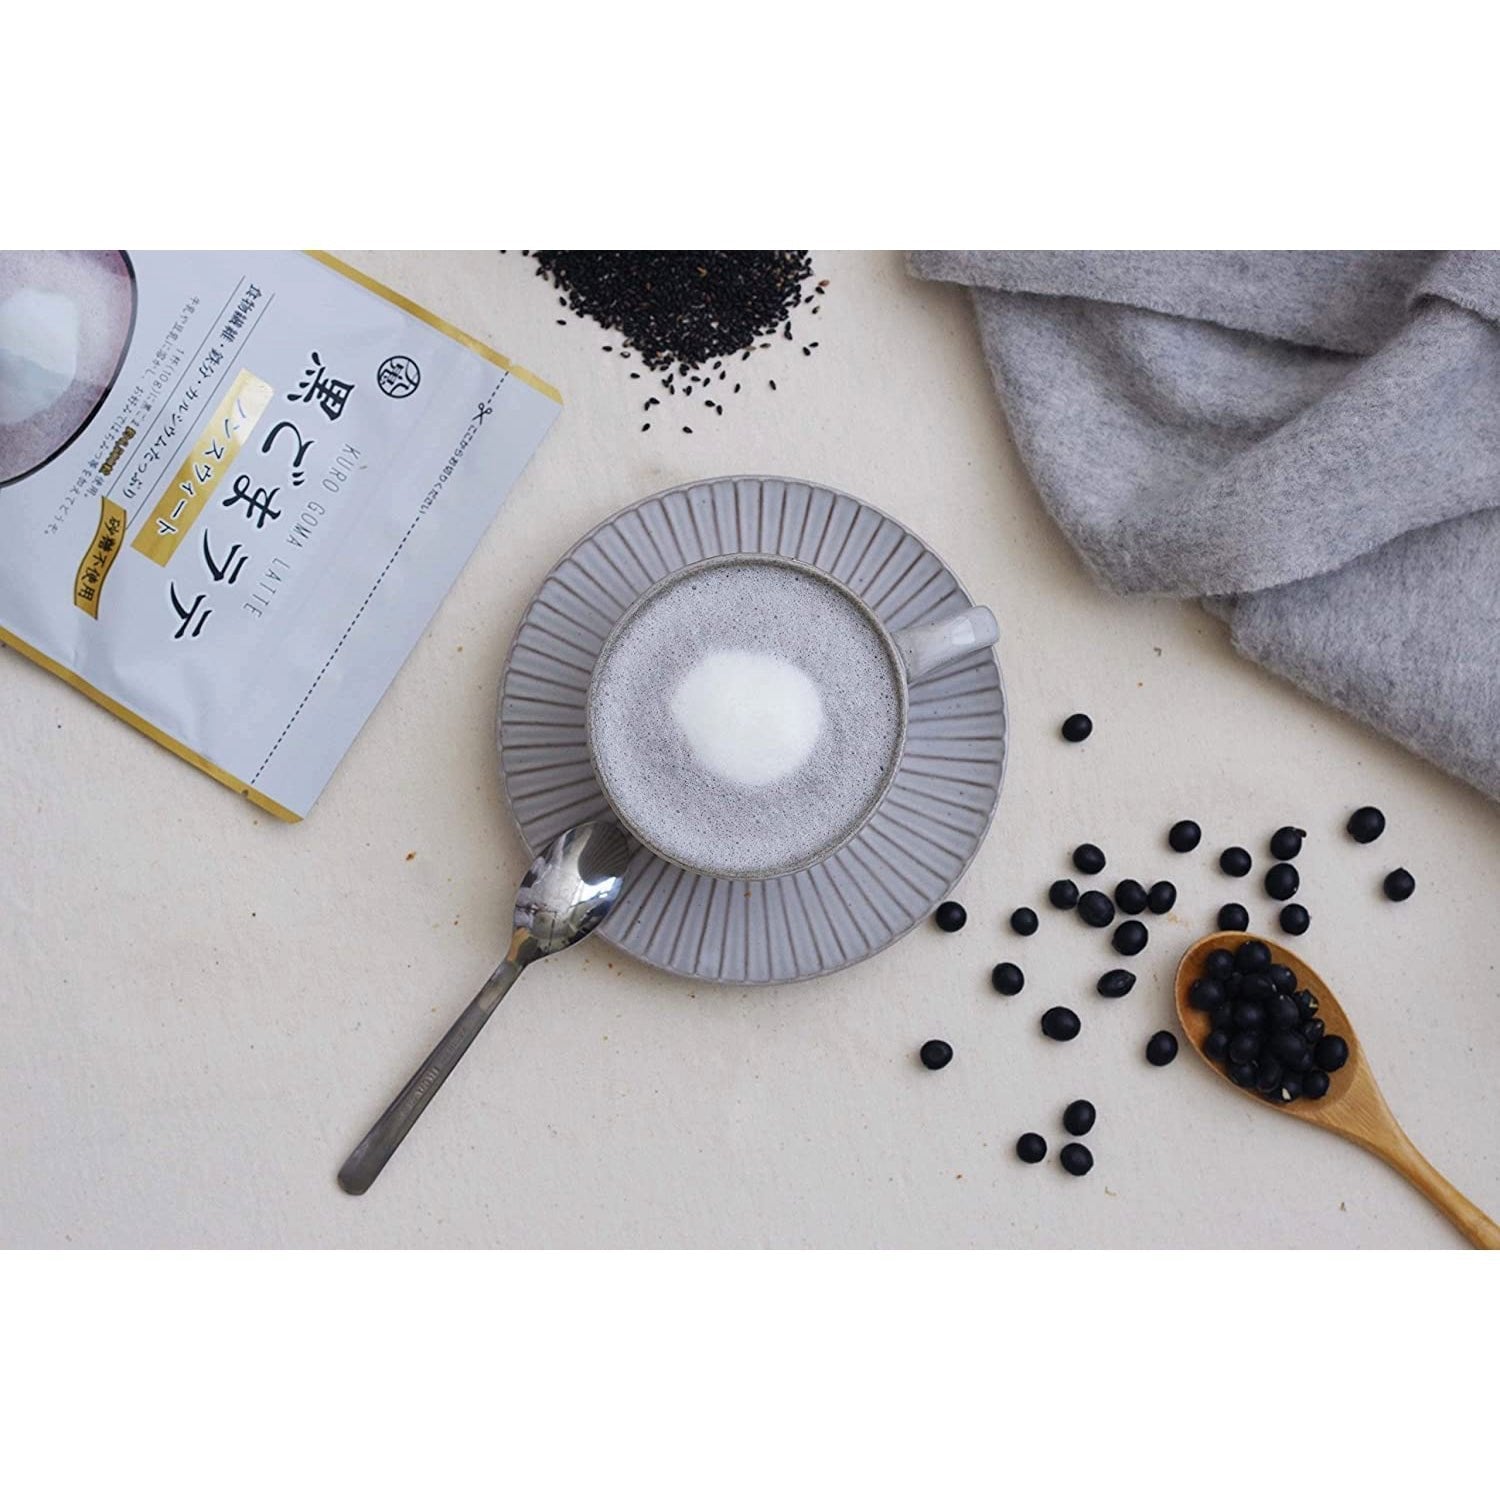 Kuki Unsweetened Kuro Goma Latte (Japanese Black Sesame Latte Powder) 100g